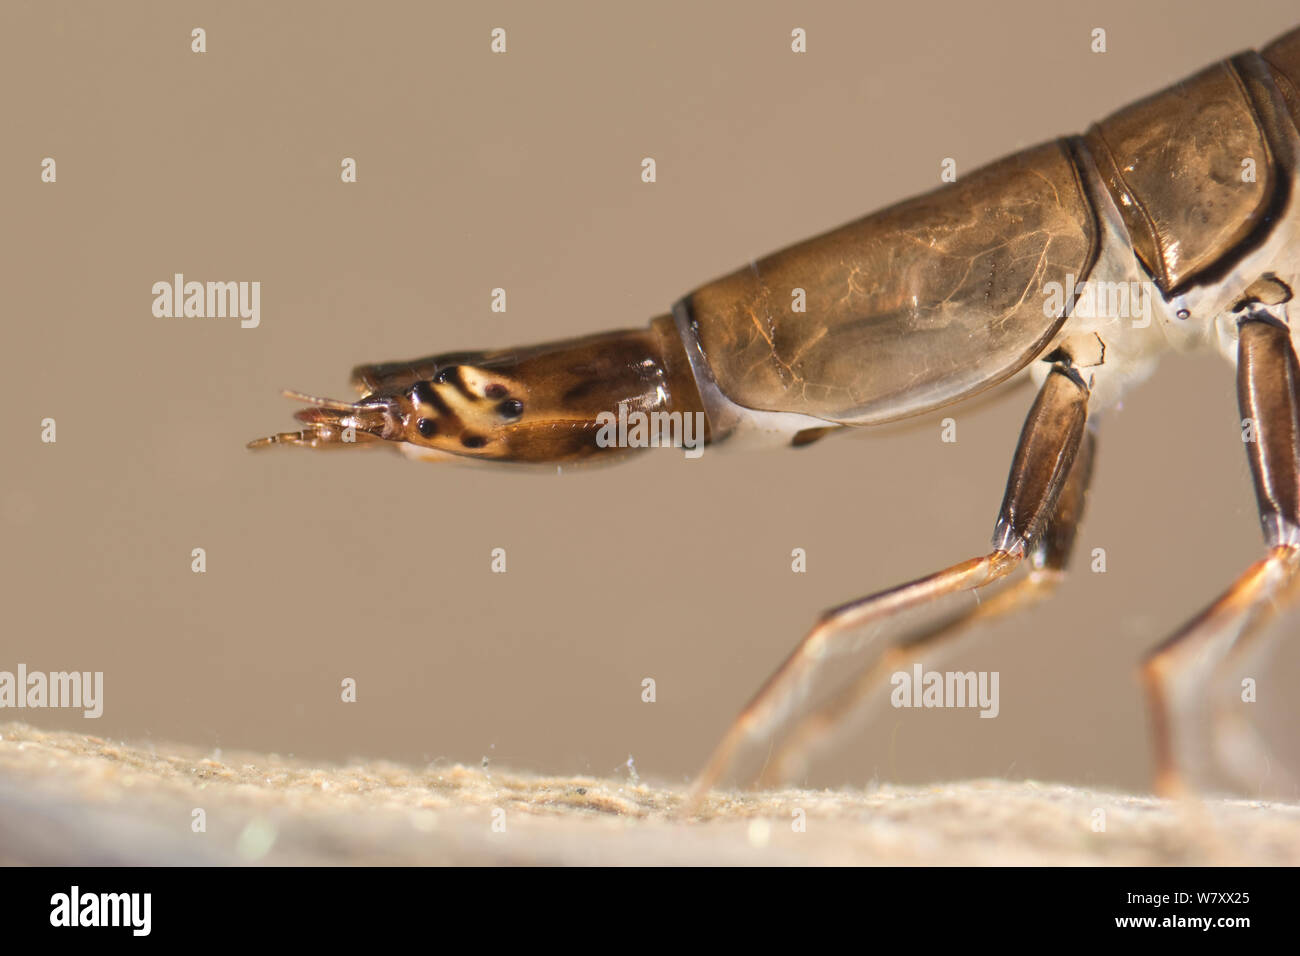 Diving beetle (Graphoderus bilineatus) larva, head detail. Europe, June, controlled conditions. Stock Photo